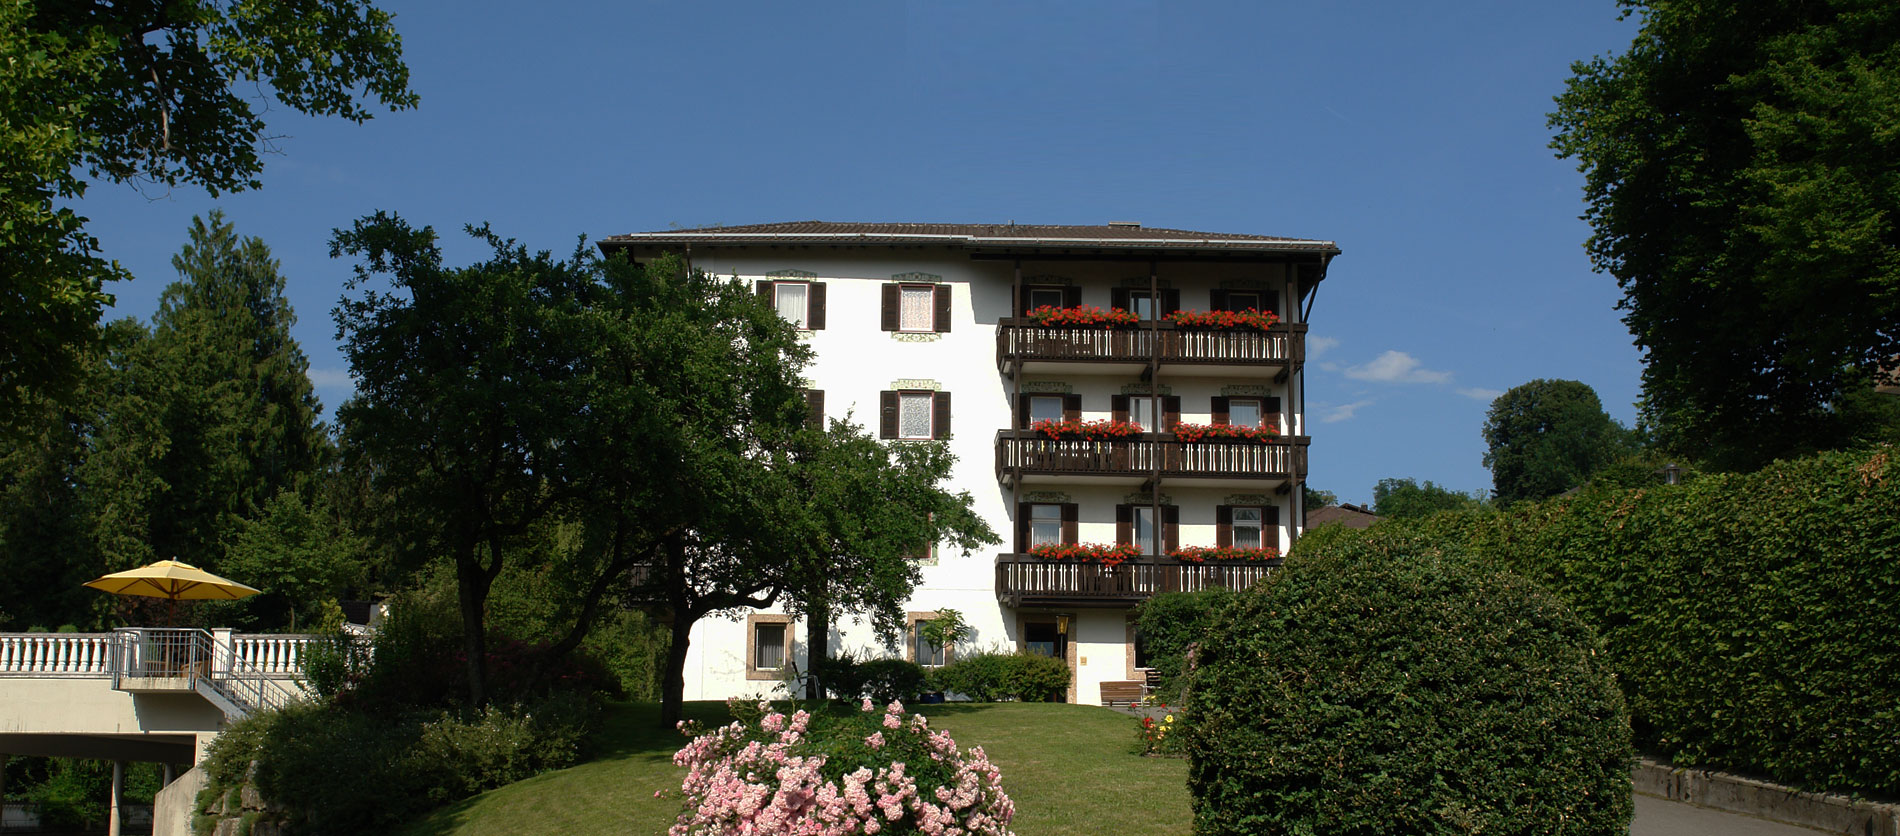 Landhaus Friedrichshöhe